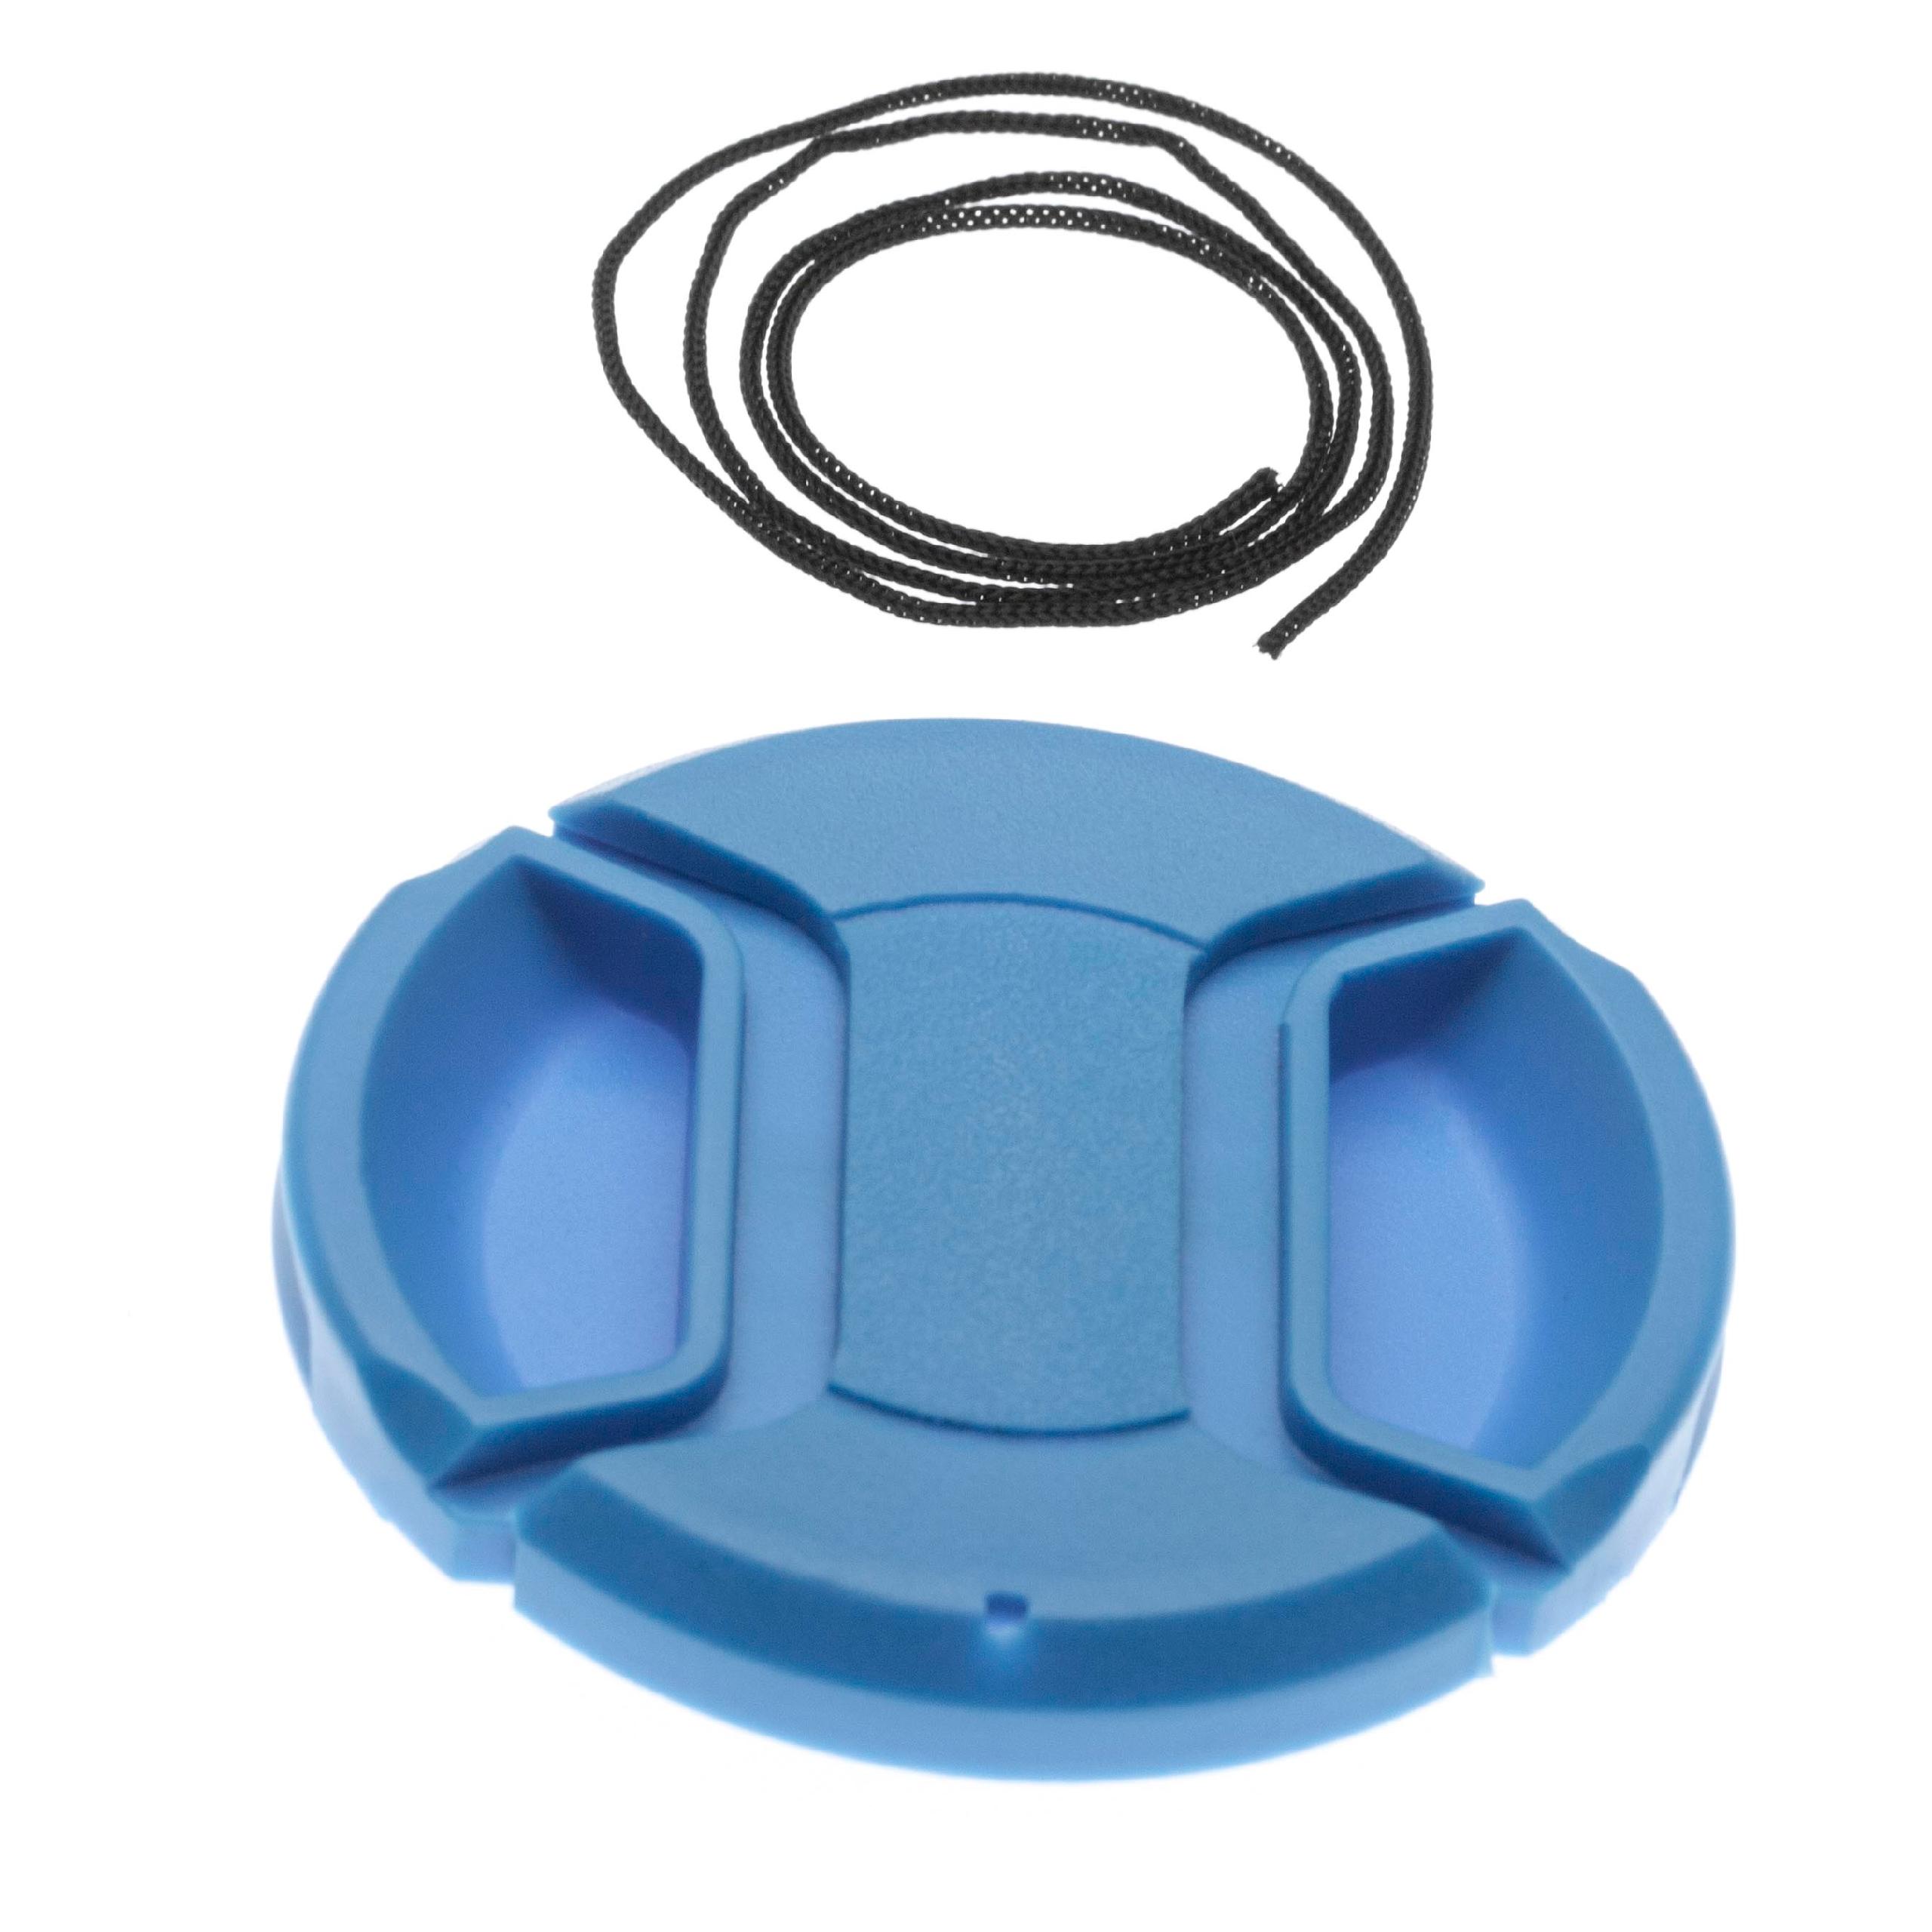 Objektivdeckel 55 mm - Mit Innengriff, Kunststoff, Blau